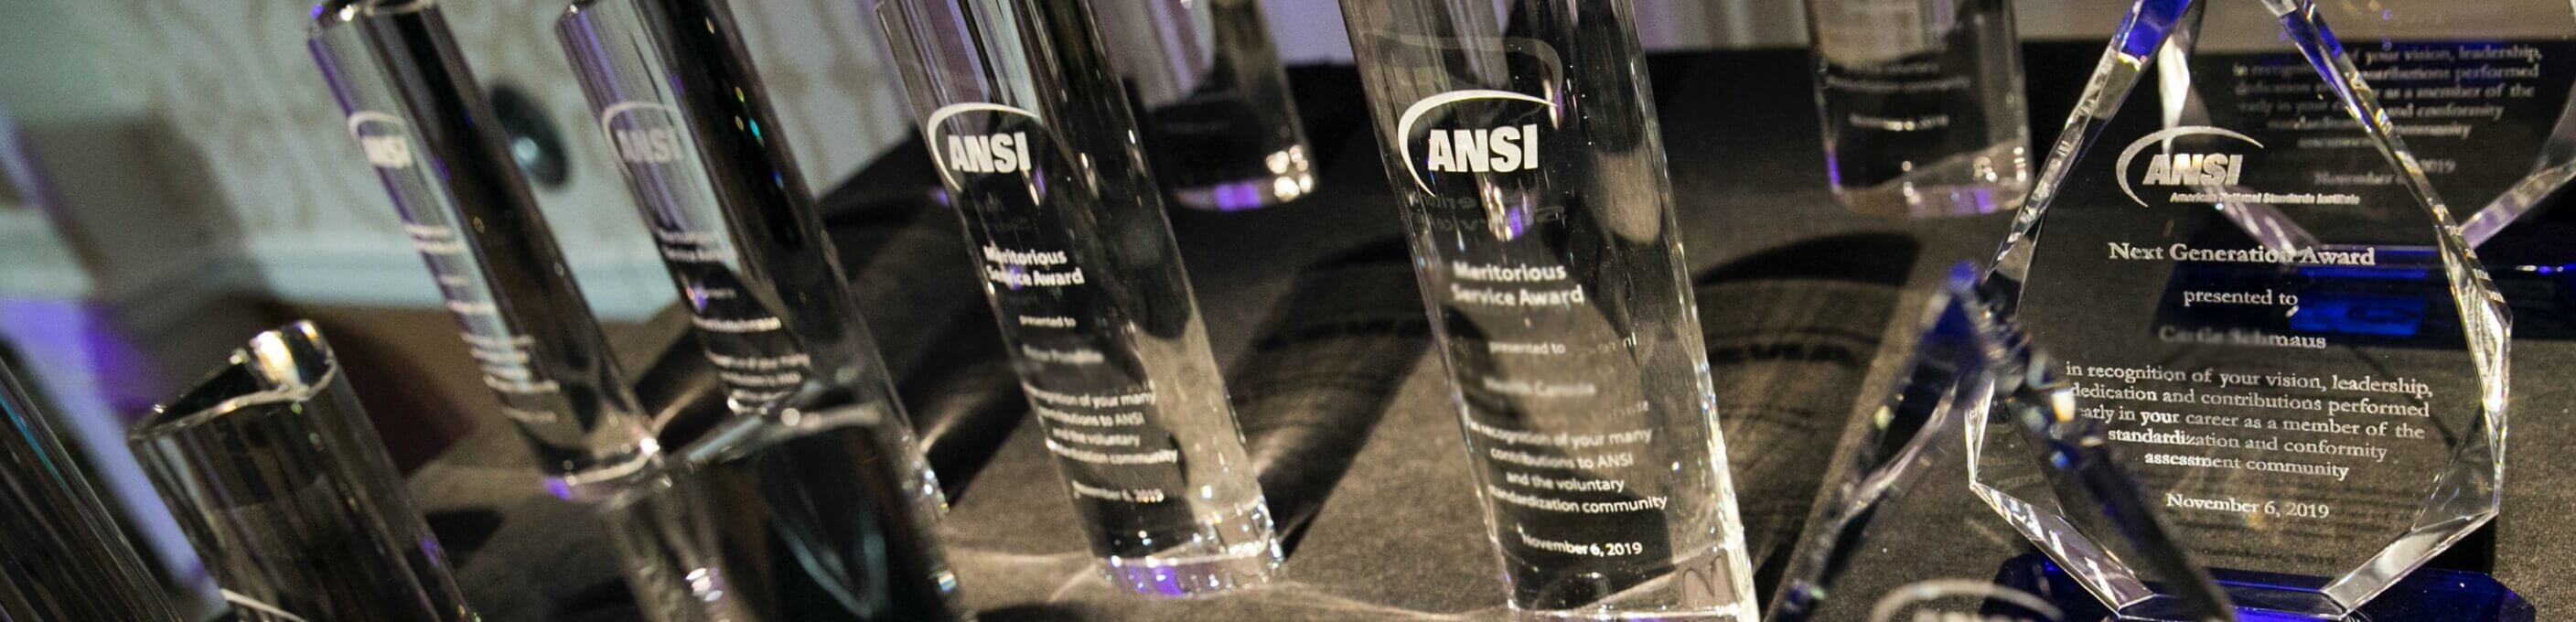 Closeup of ANSI Award crystals on a black table.